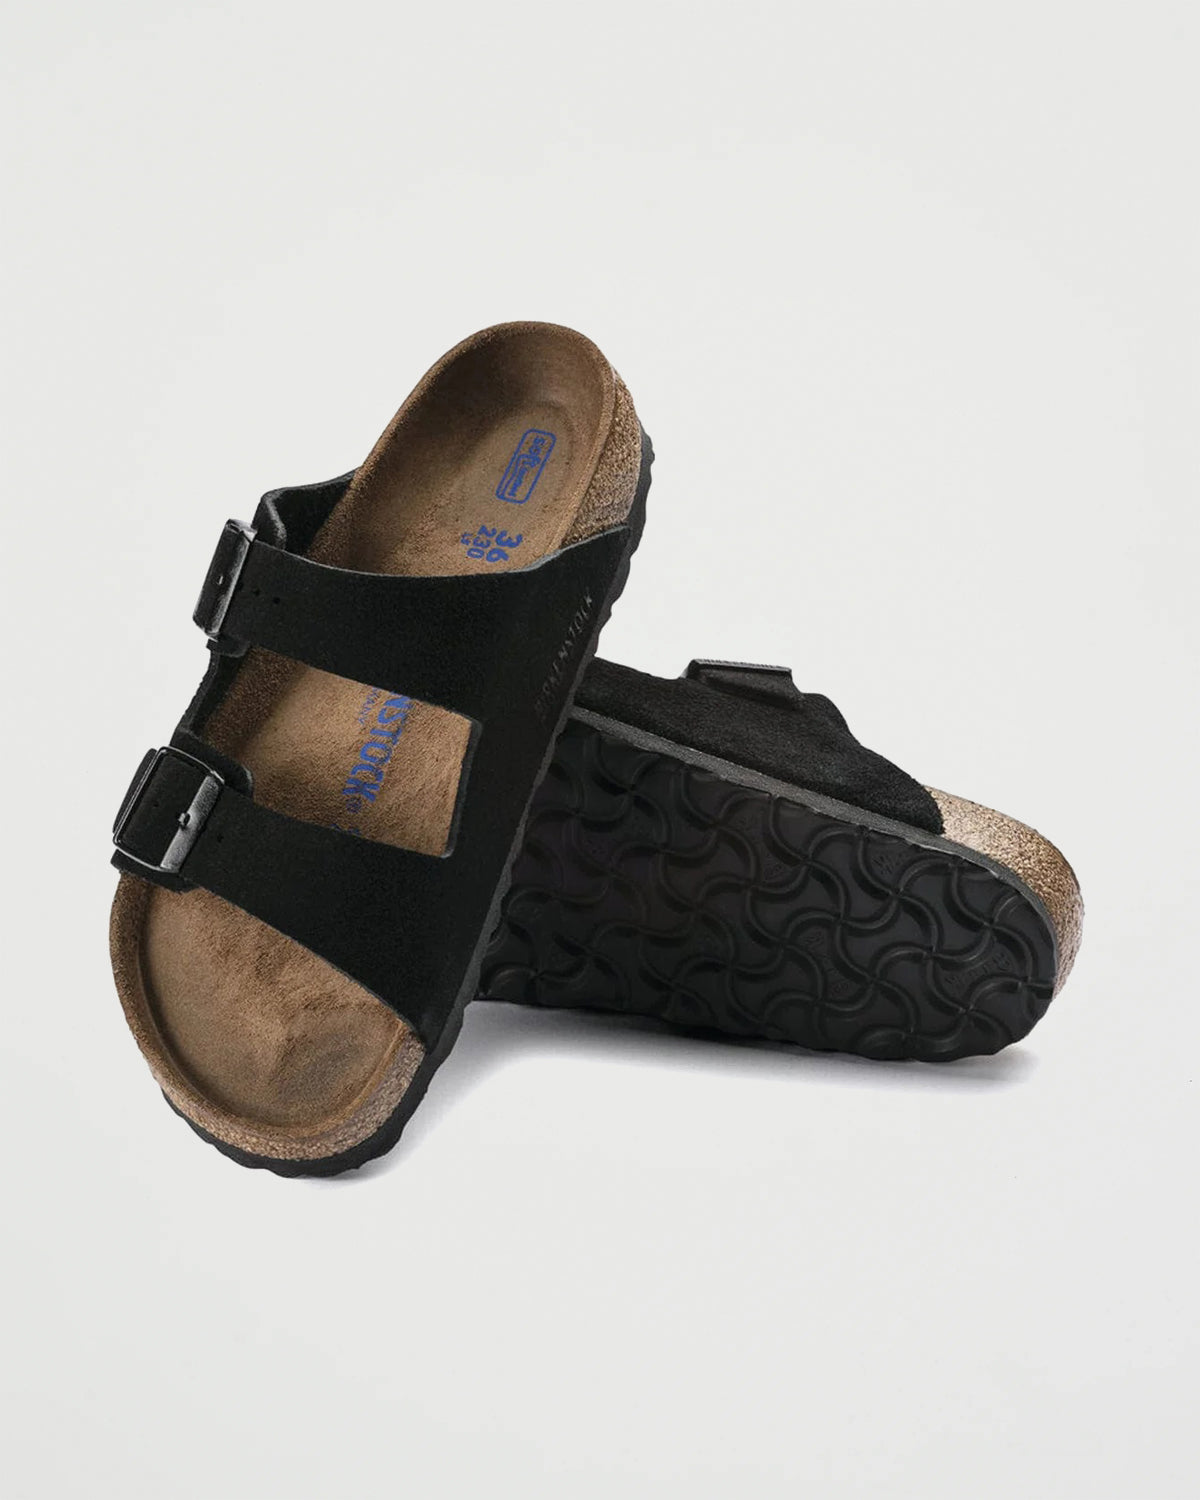 Birkenstock Arizona Black Narrow Suede Shoes Leather Unisex